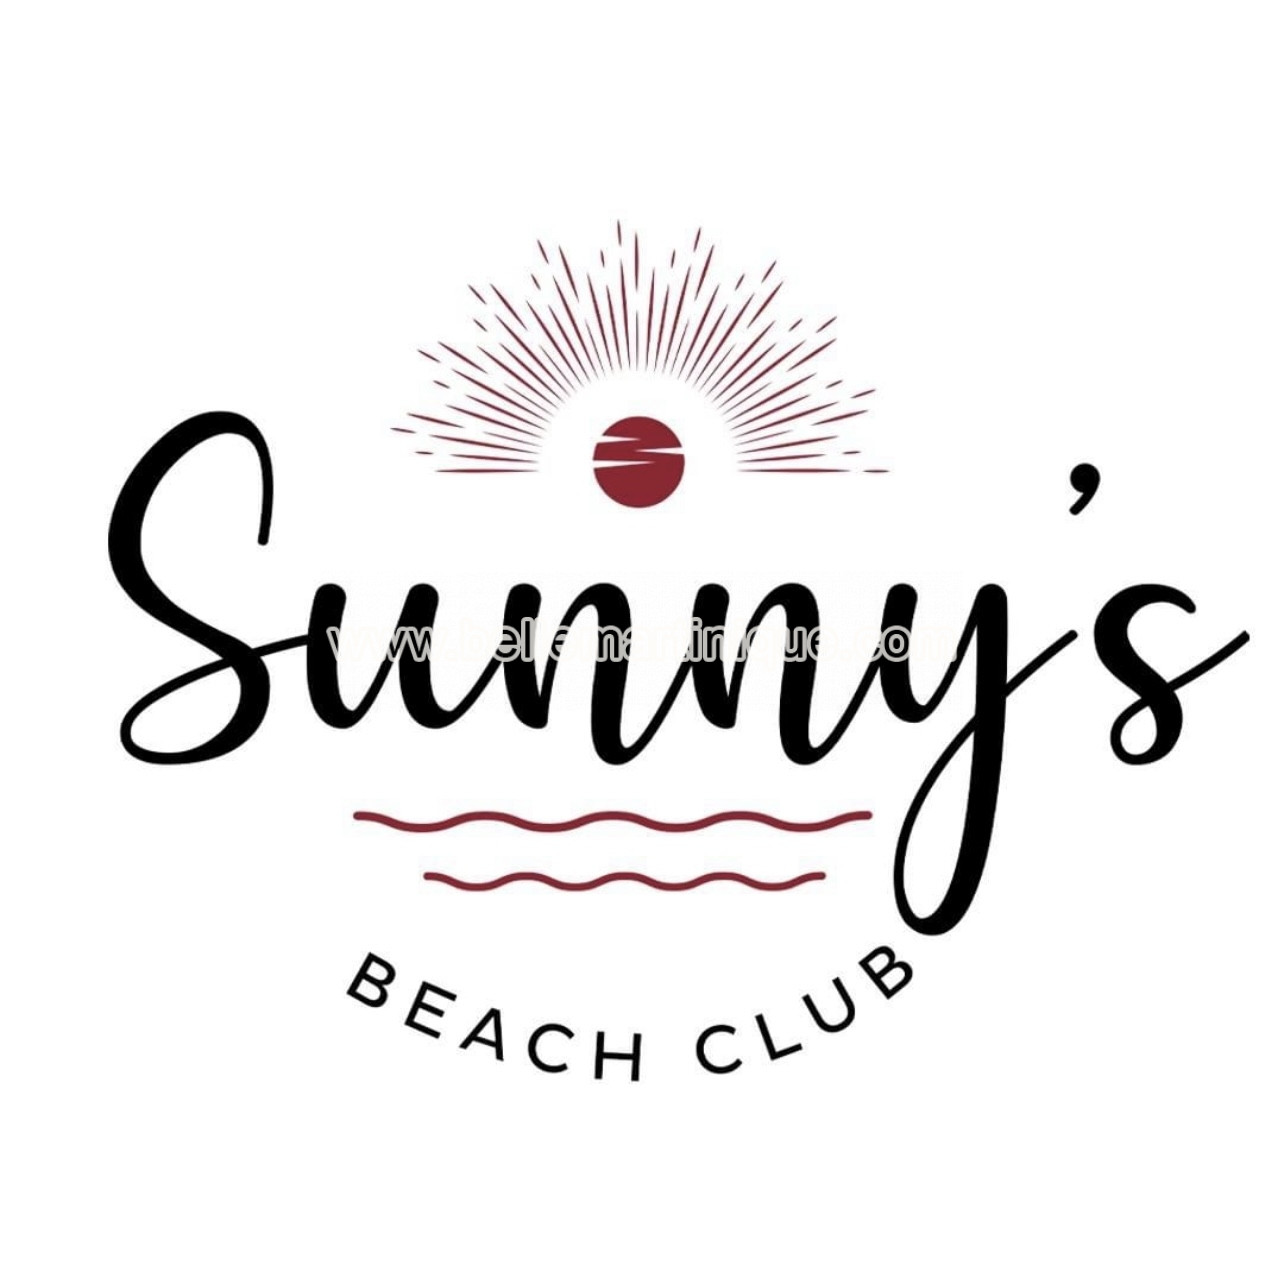 Sunny's Beach club - restaurant - riviere pilote - martinique - antilles - caraibes